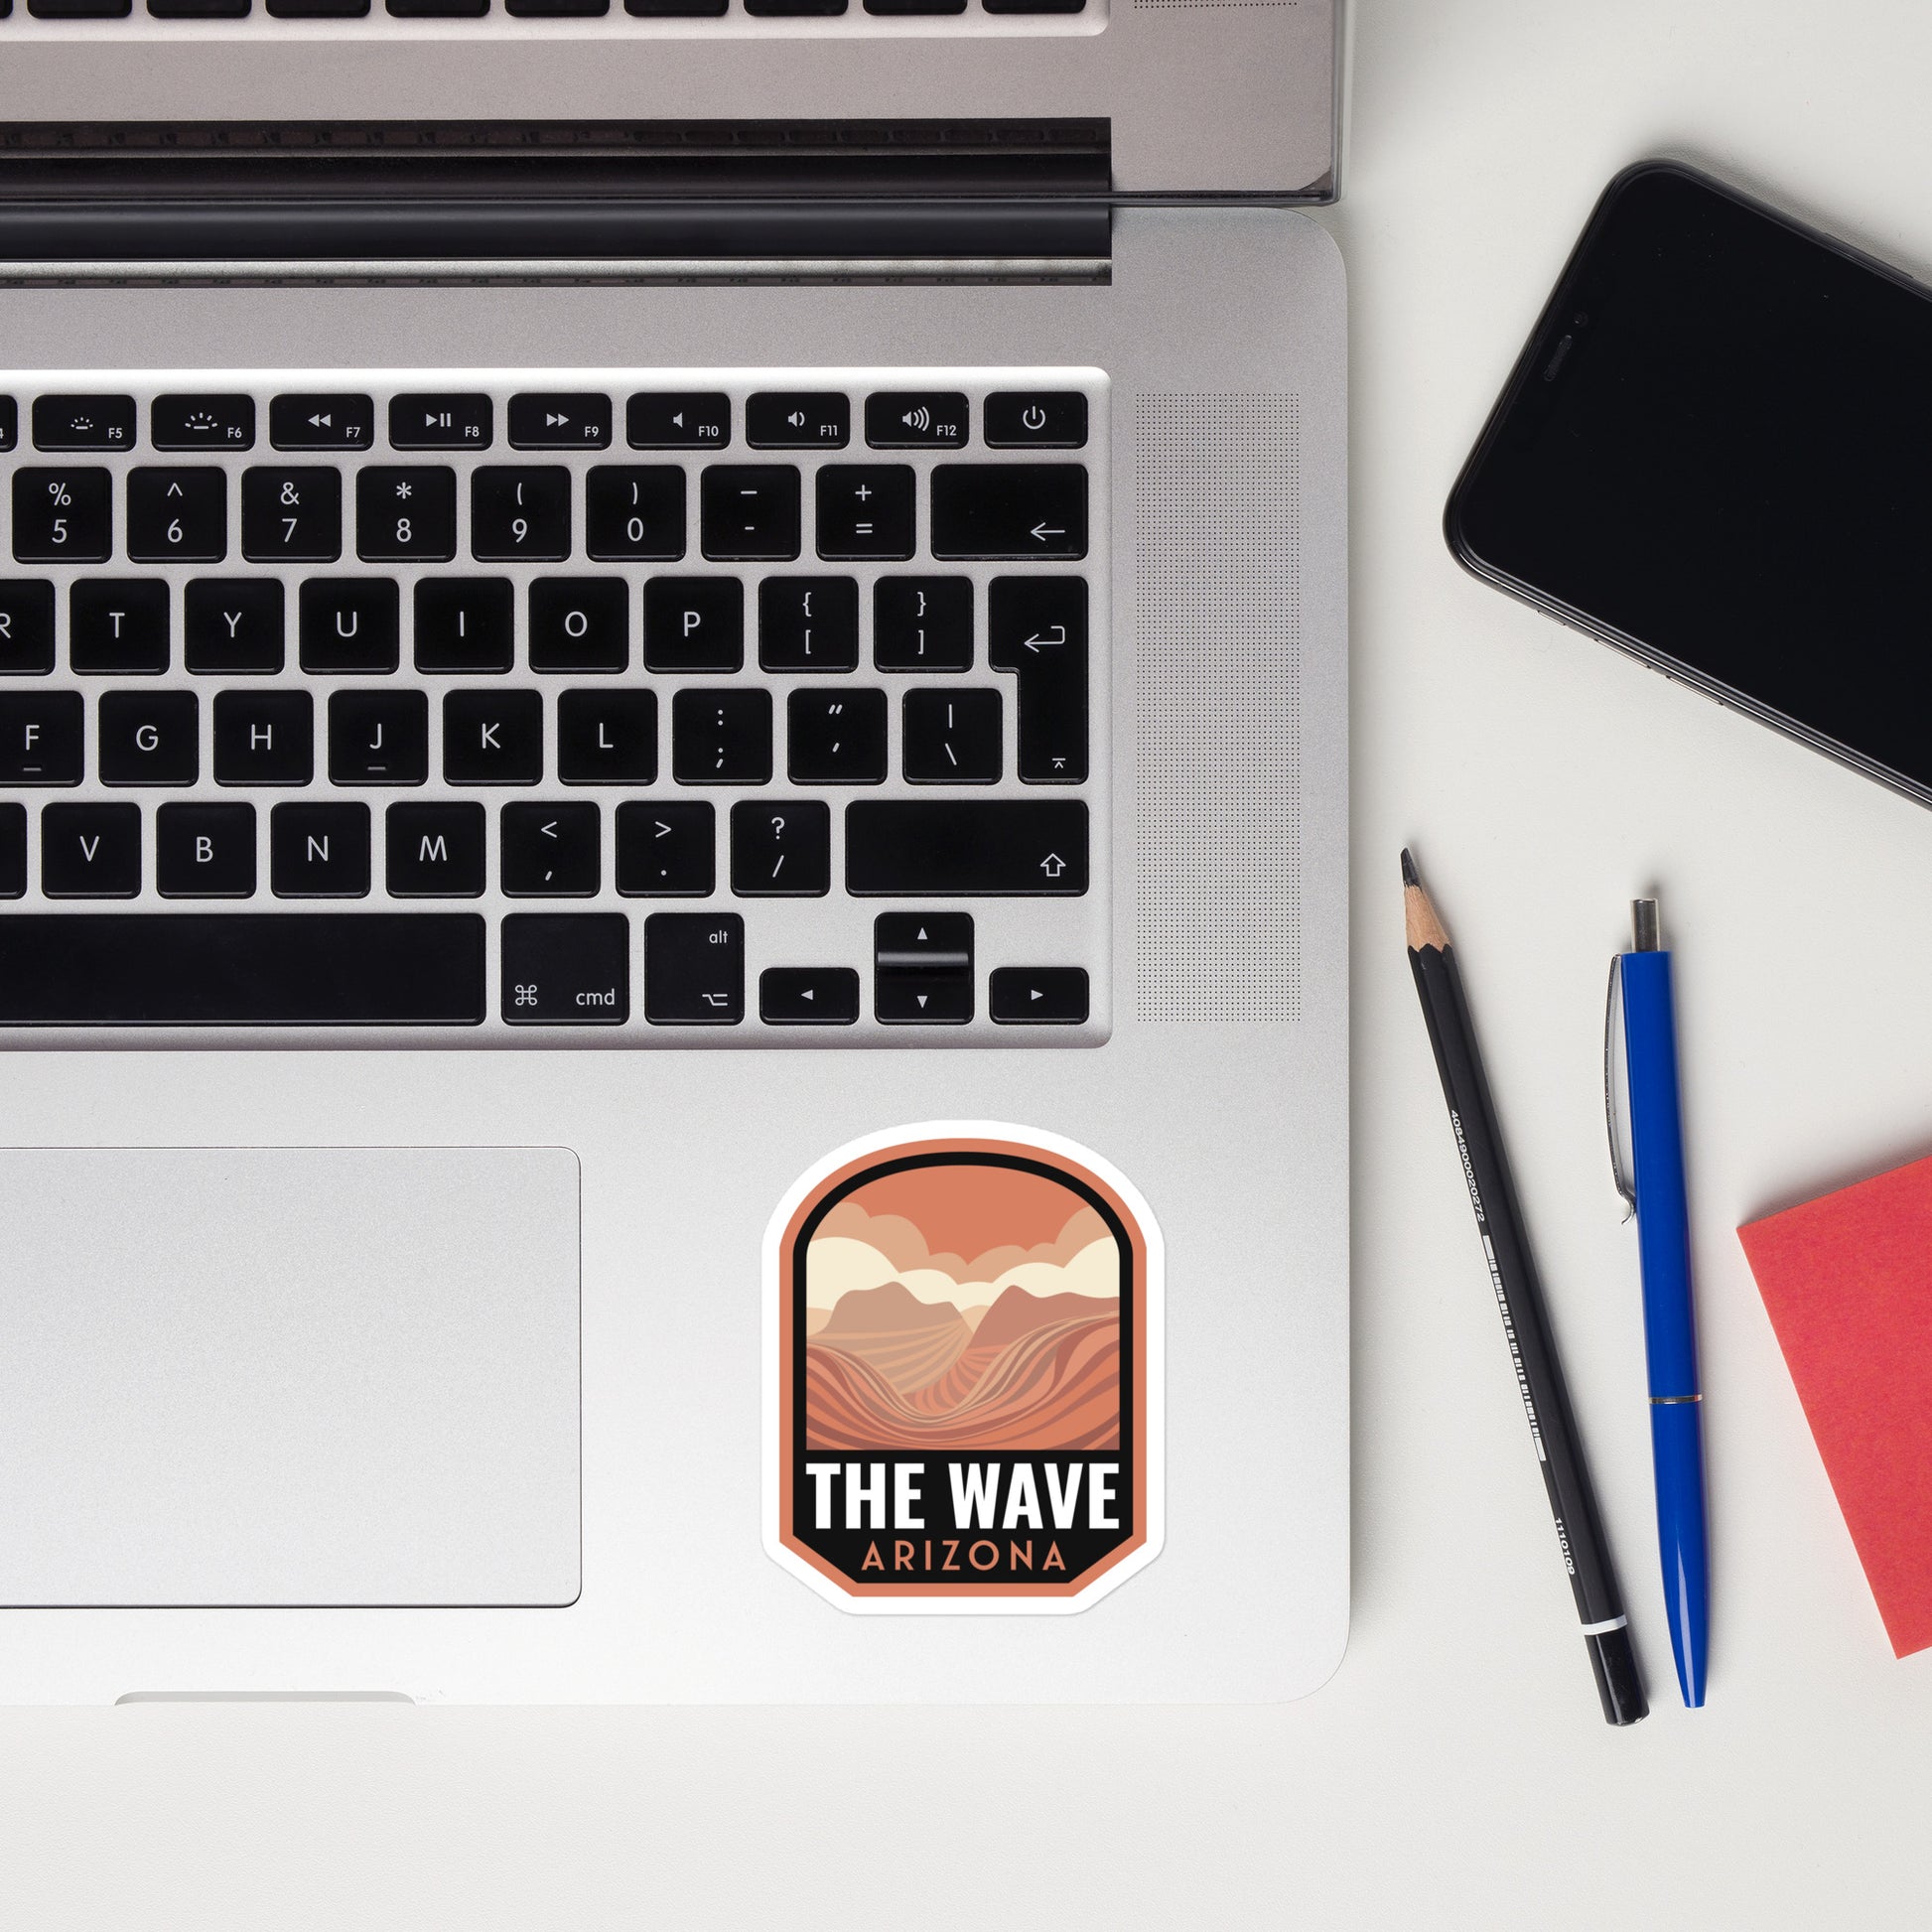 A sticker of The Wave Arizona on a laptop